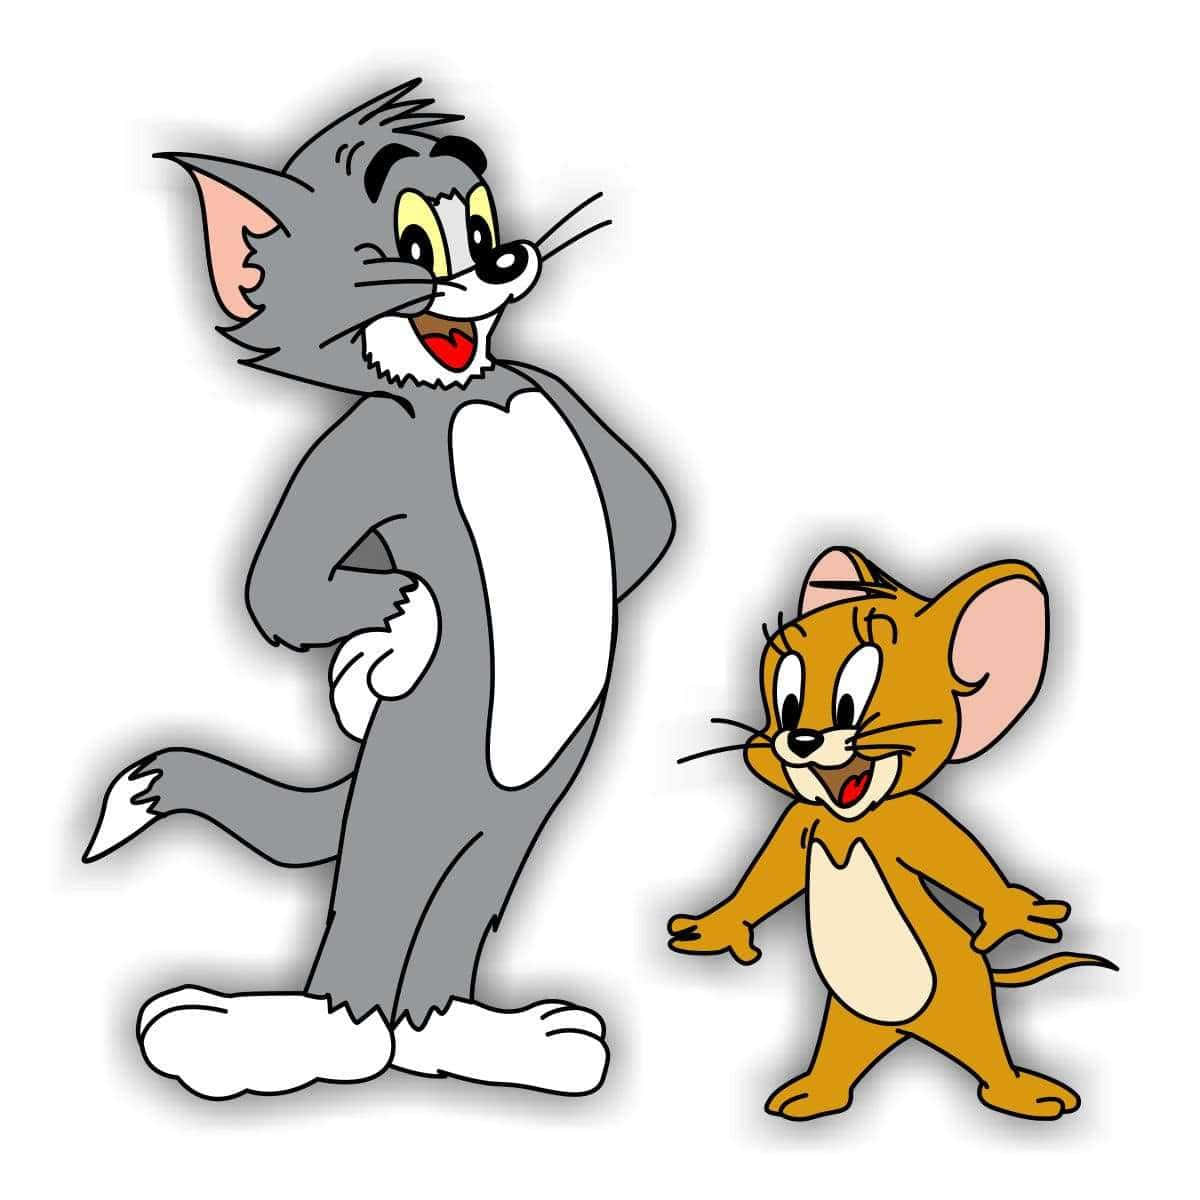 Fototrasparente Divertente Di Tom E Jerry